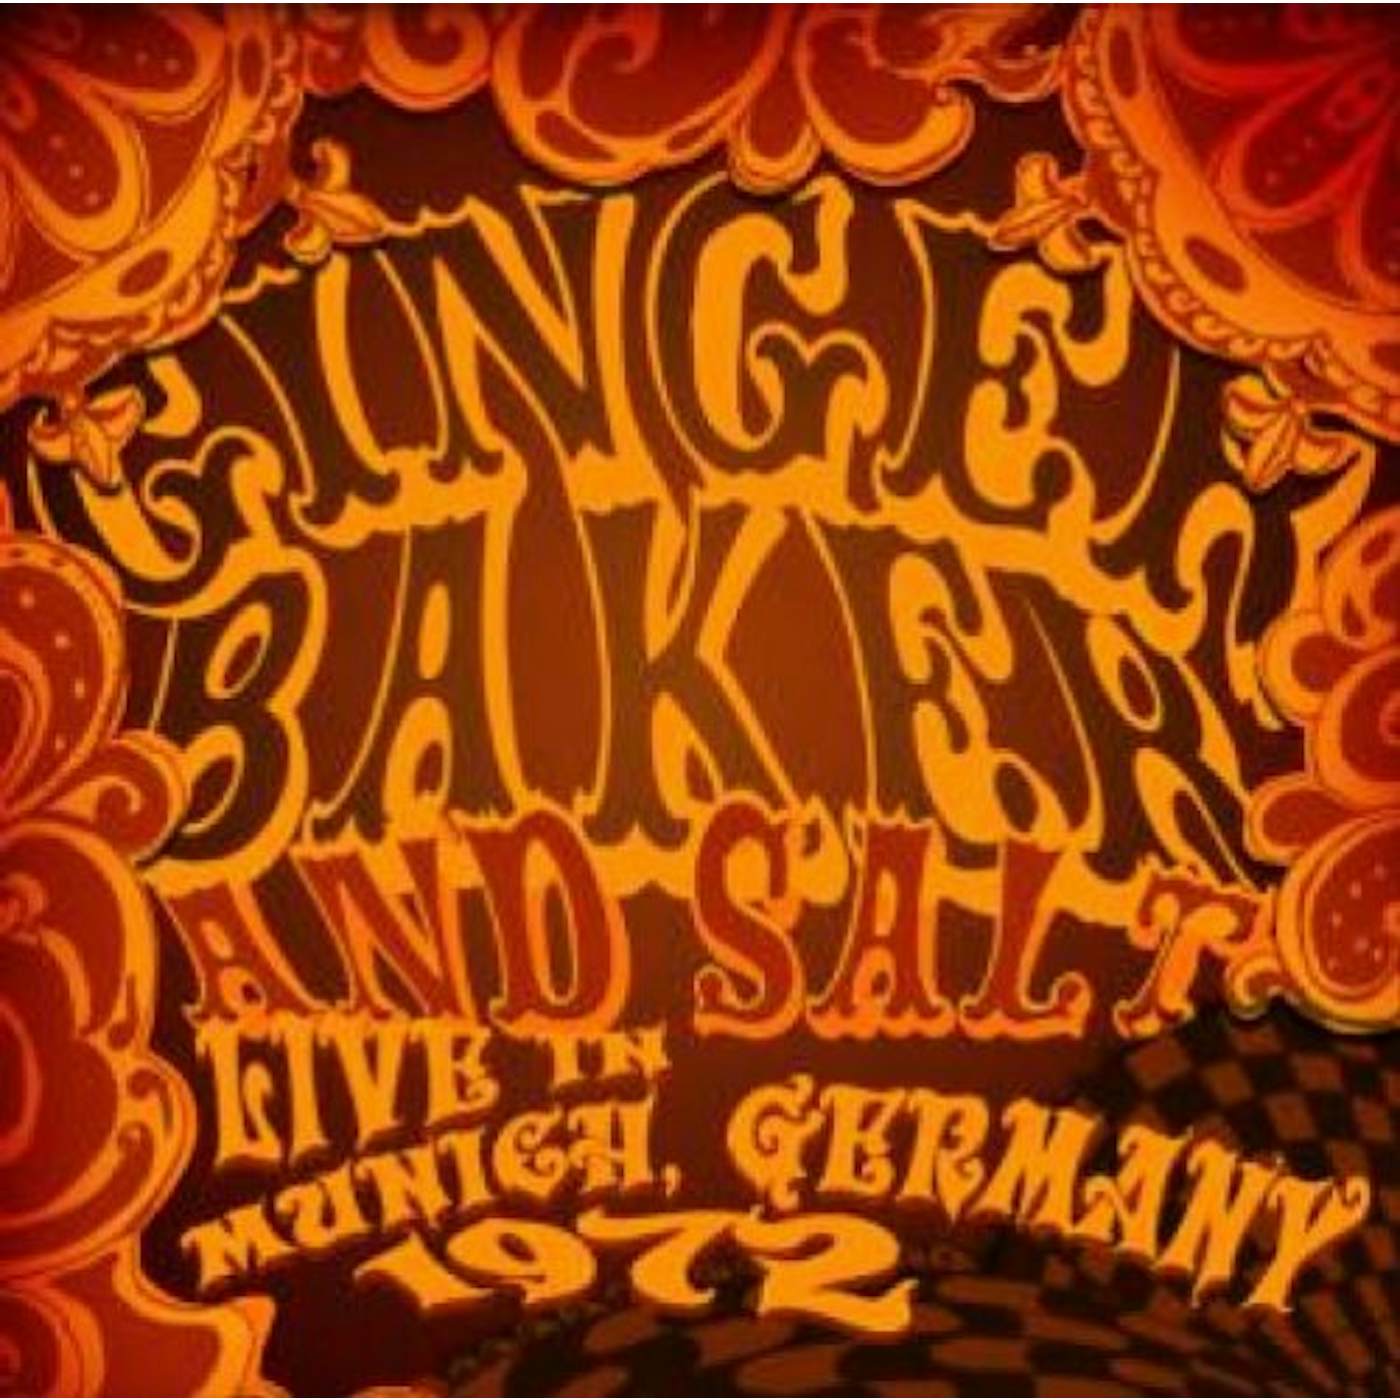 Ginger Baker LIVE IN MUNICH GERMANY 1972 CD